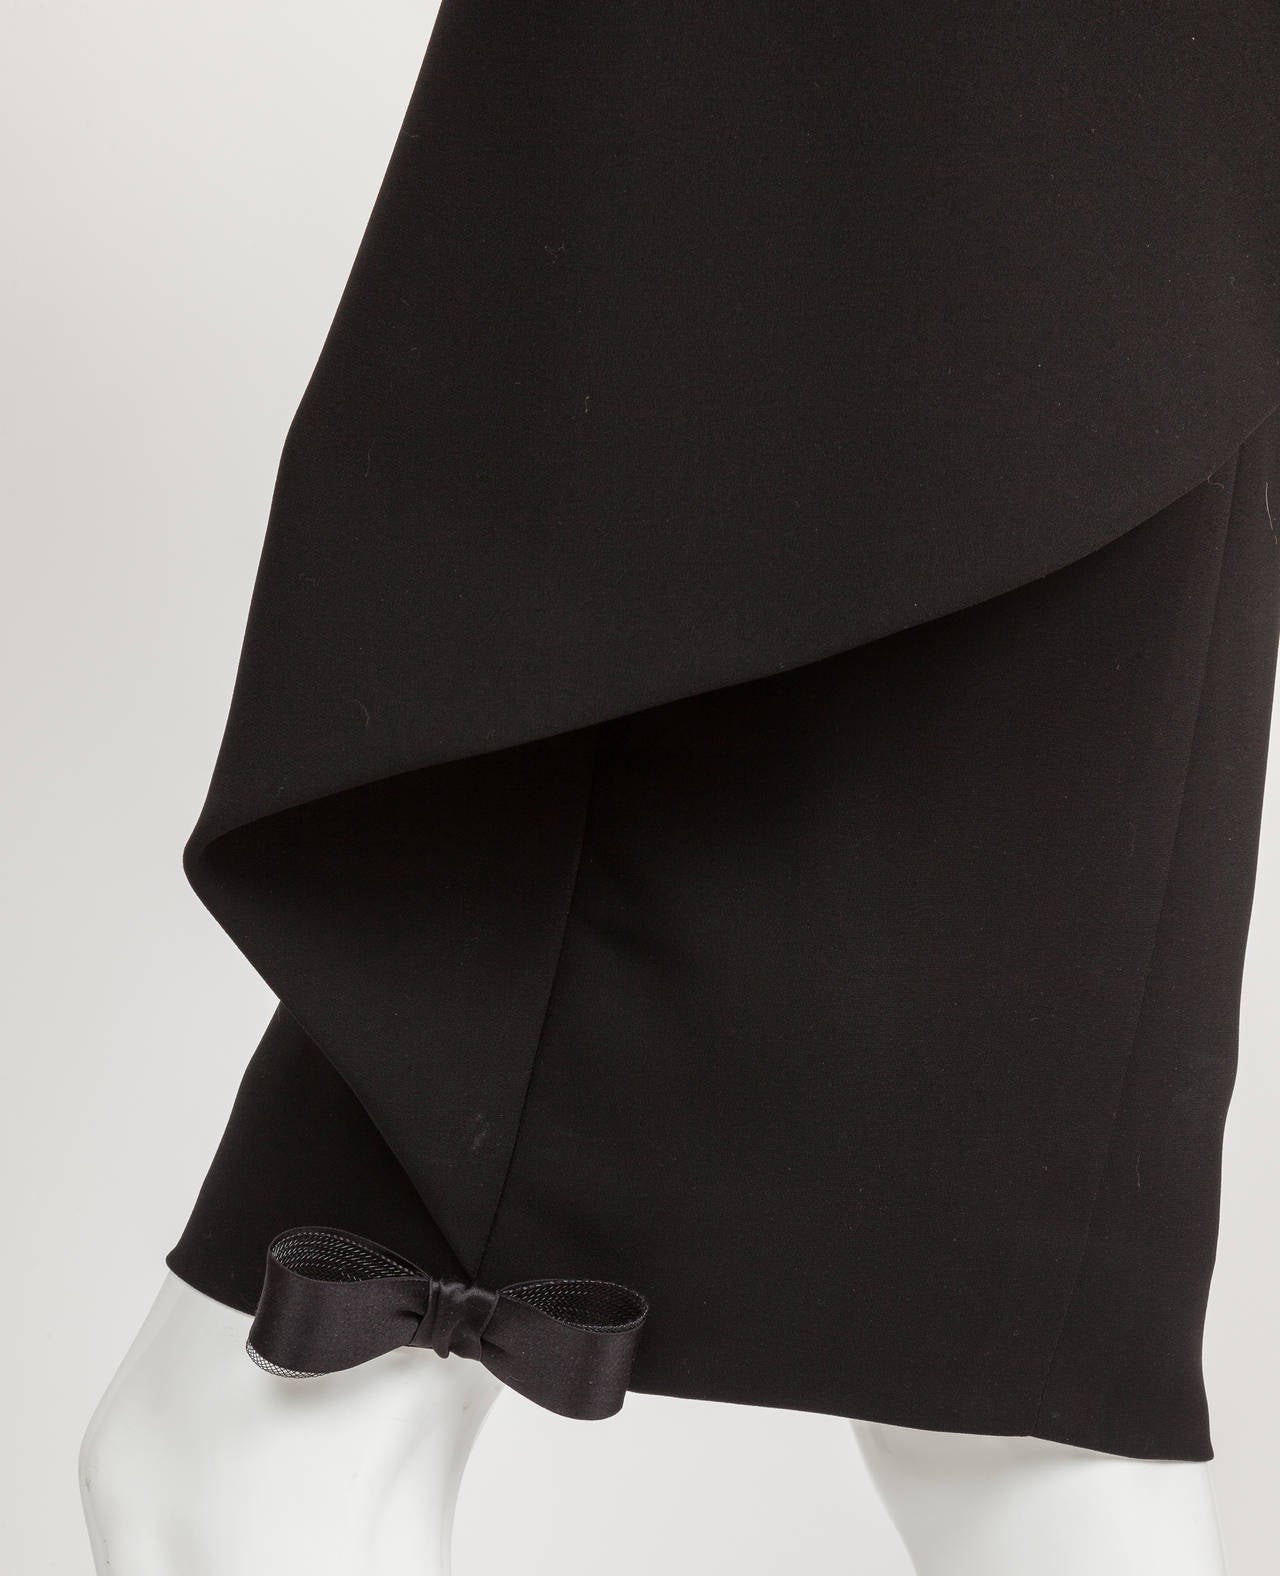 Pierre Cardin Haute Couture Asymmetric Silk Cocktail Dress w/Cape ca. 1992 4